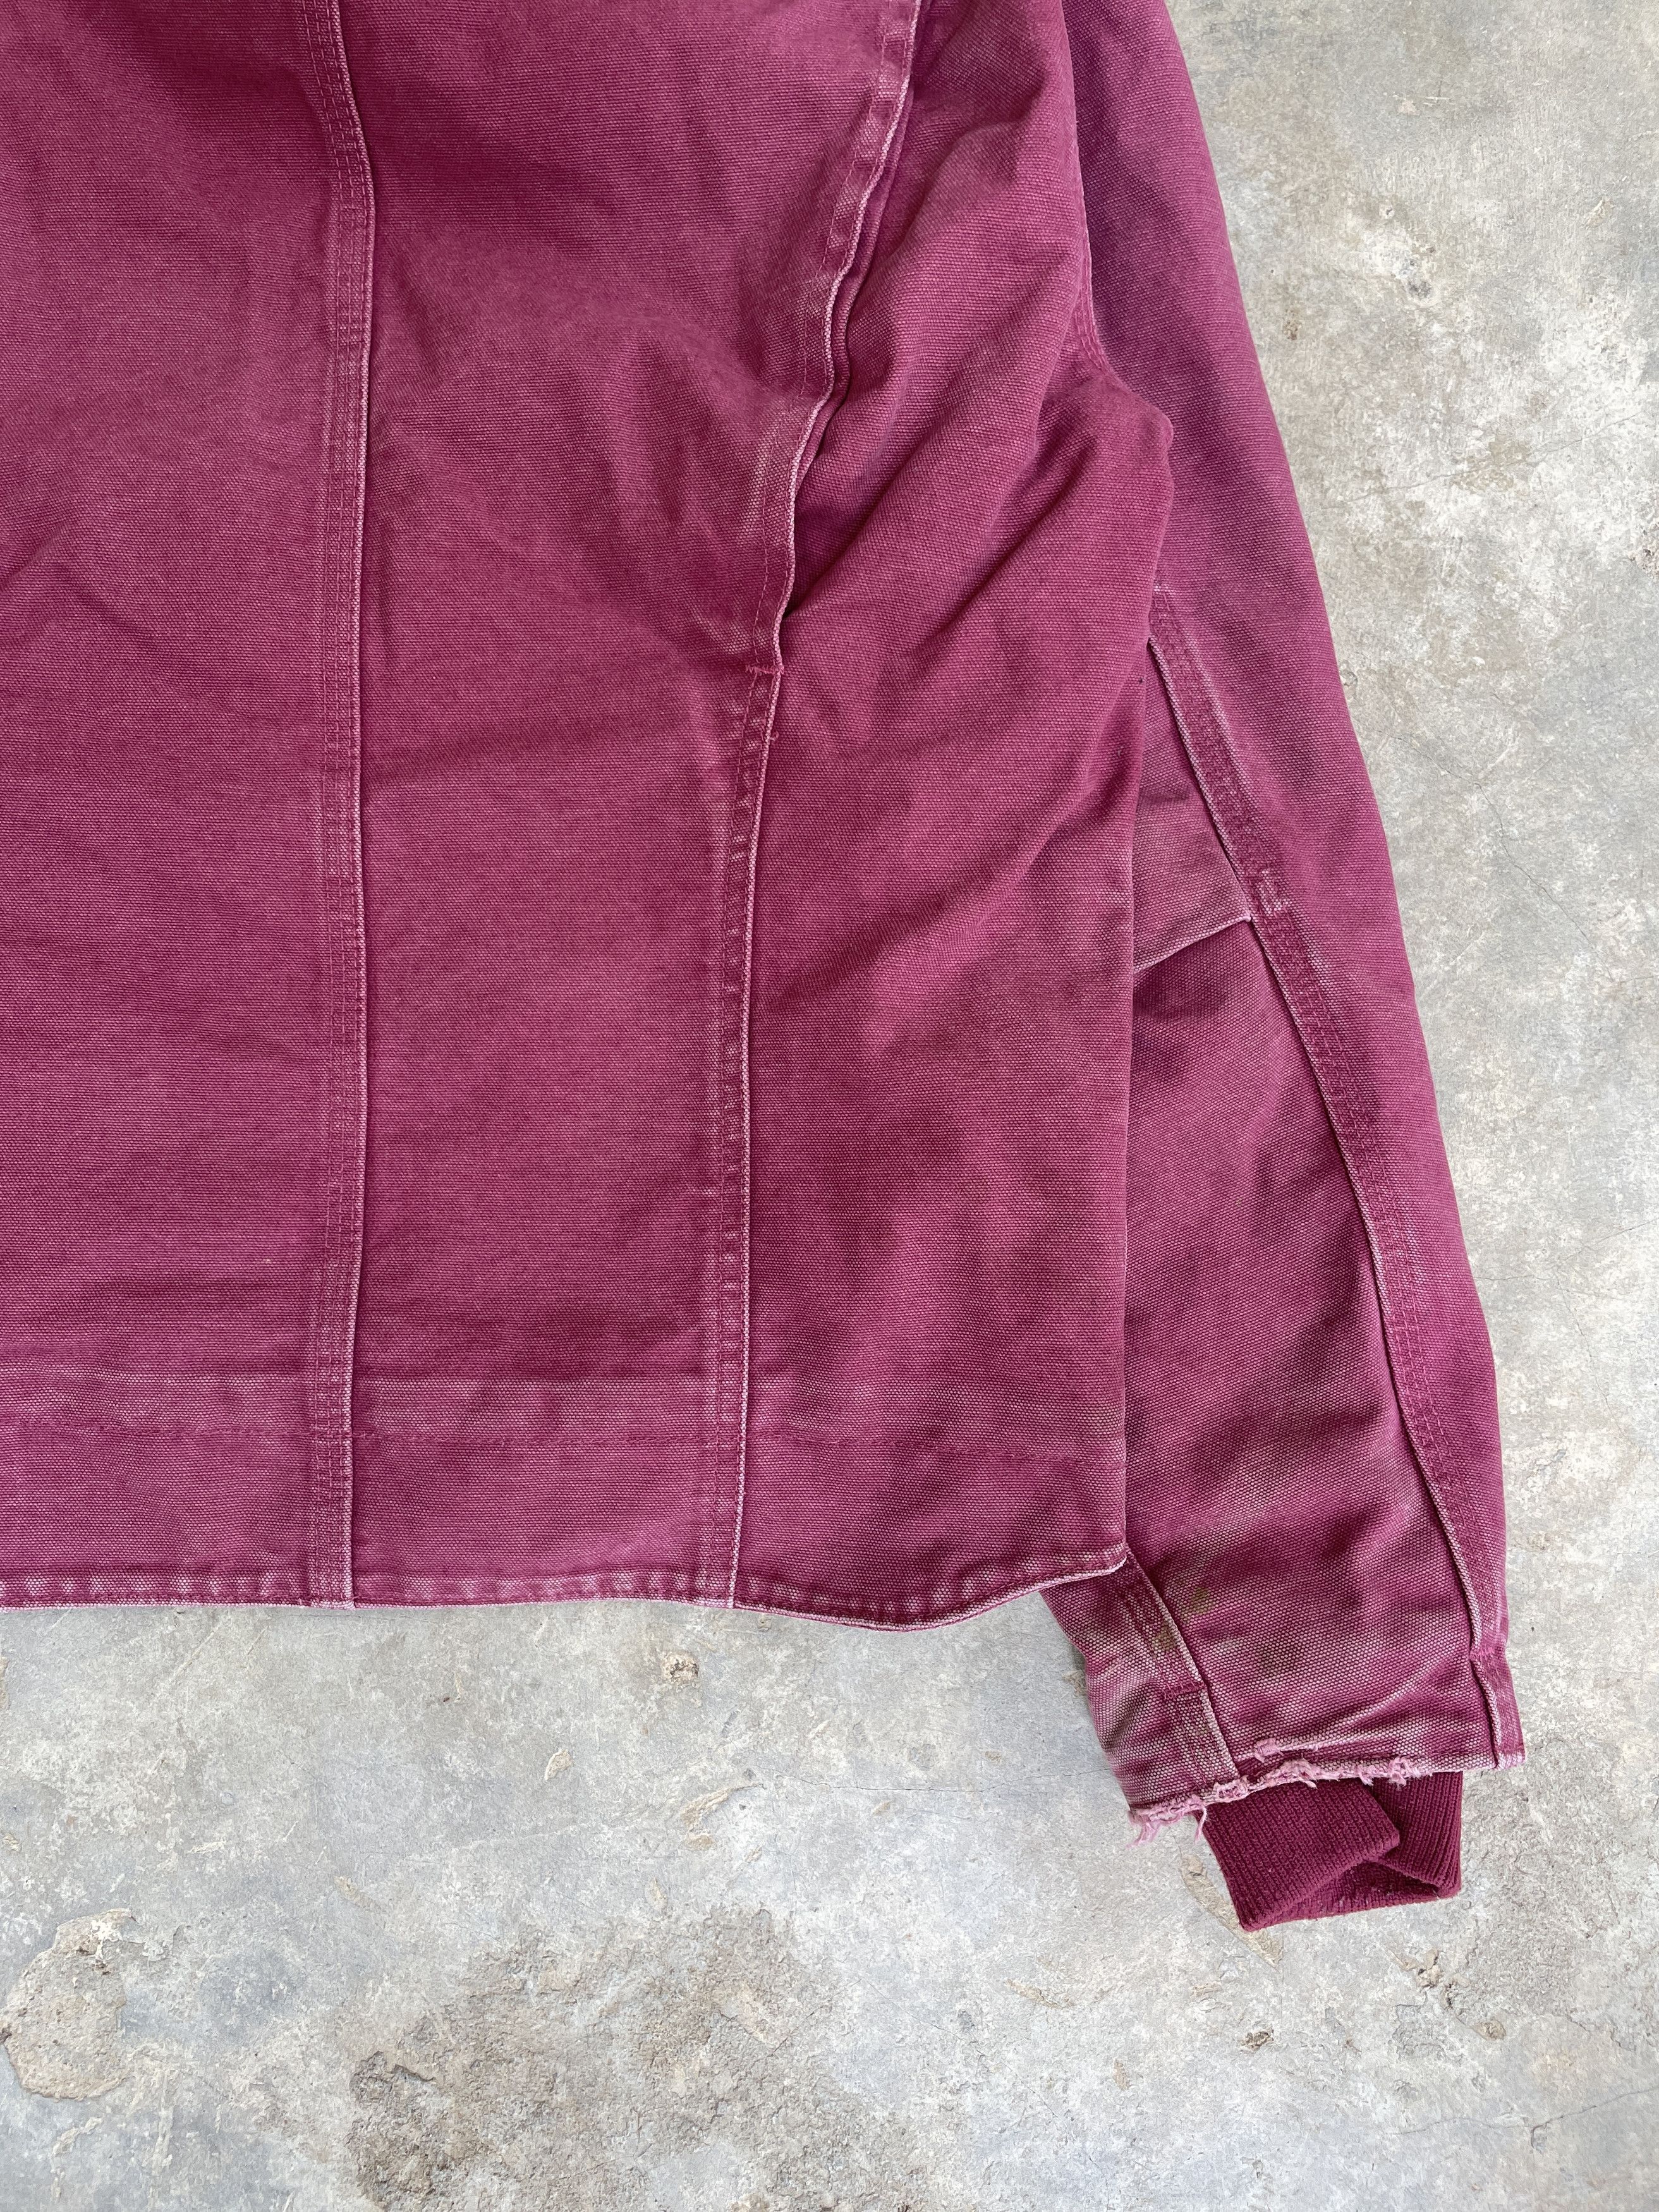 Vintage 1990s Sun Faded Pink Carhartt Jacket Size US S / EU 44-46 / 1 - 5 Thumbnail